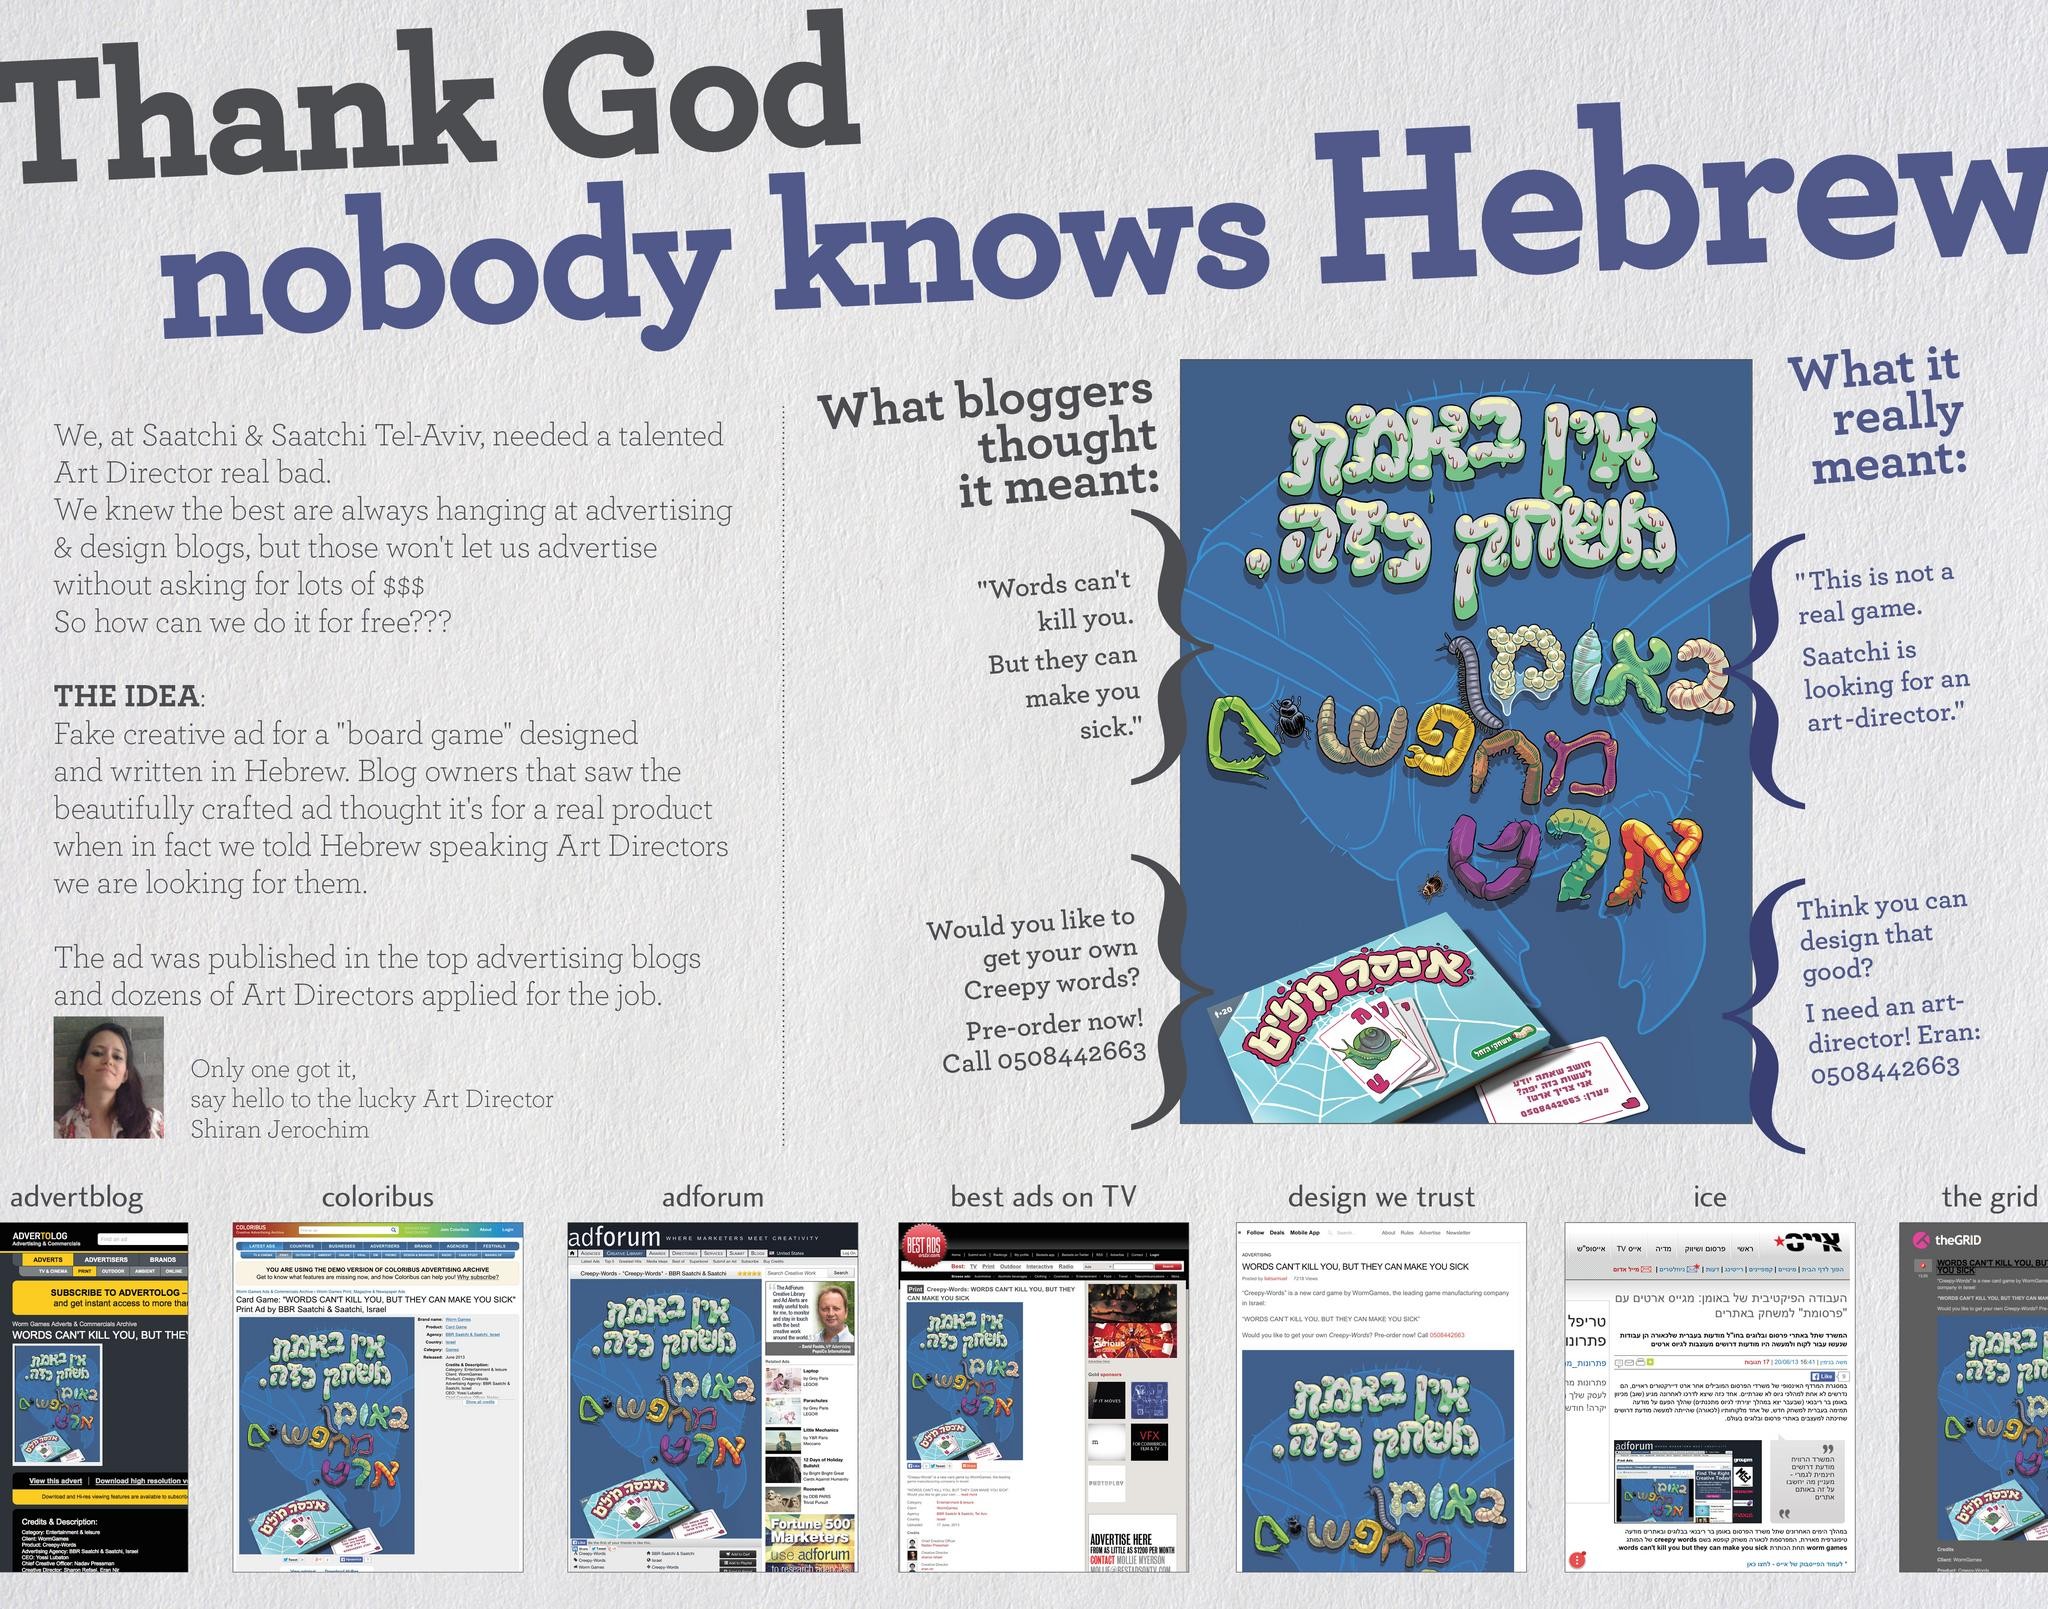 THANK GOD NOBODY KNOWS HEBREW